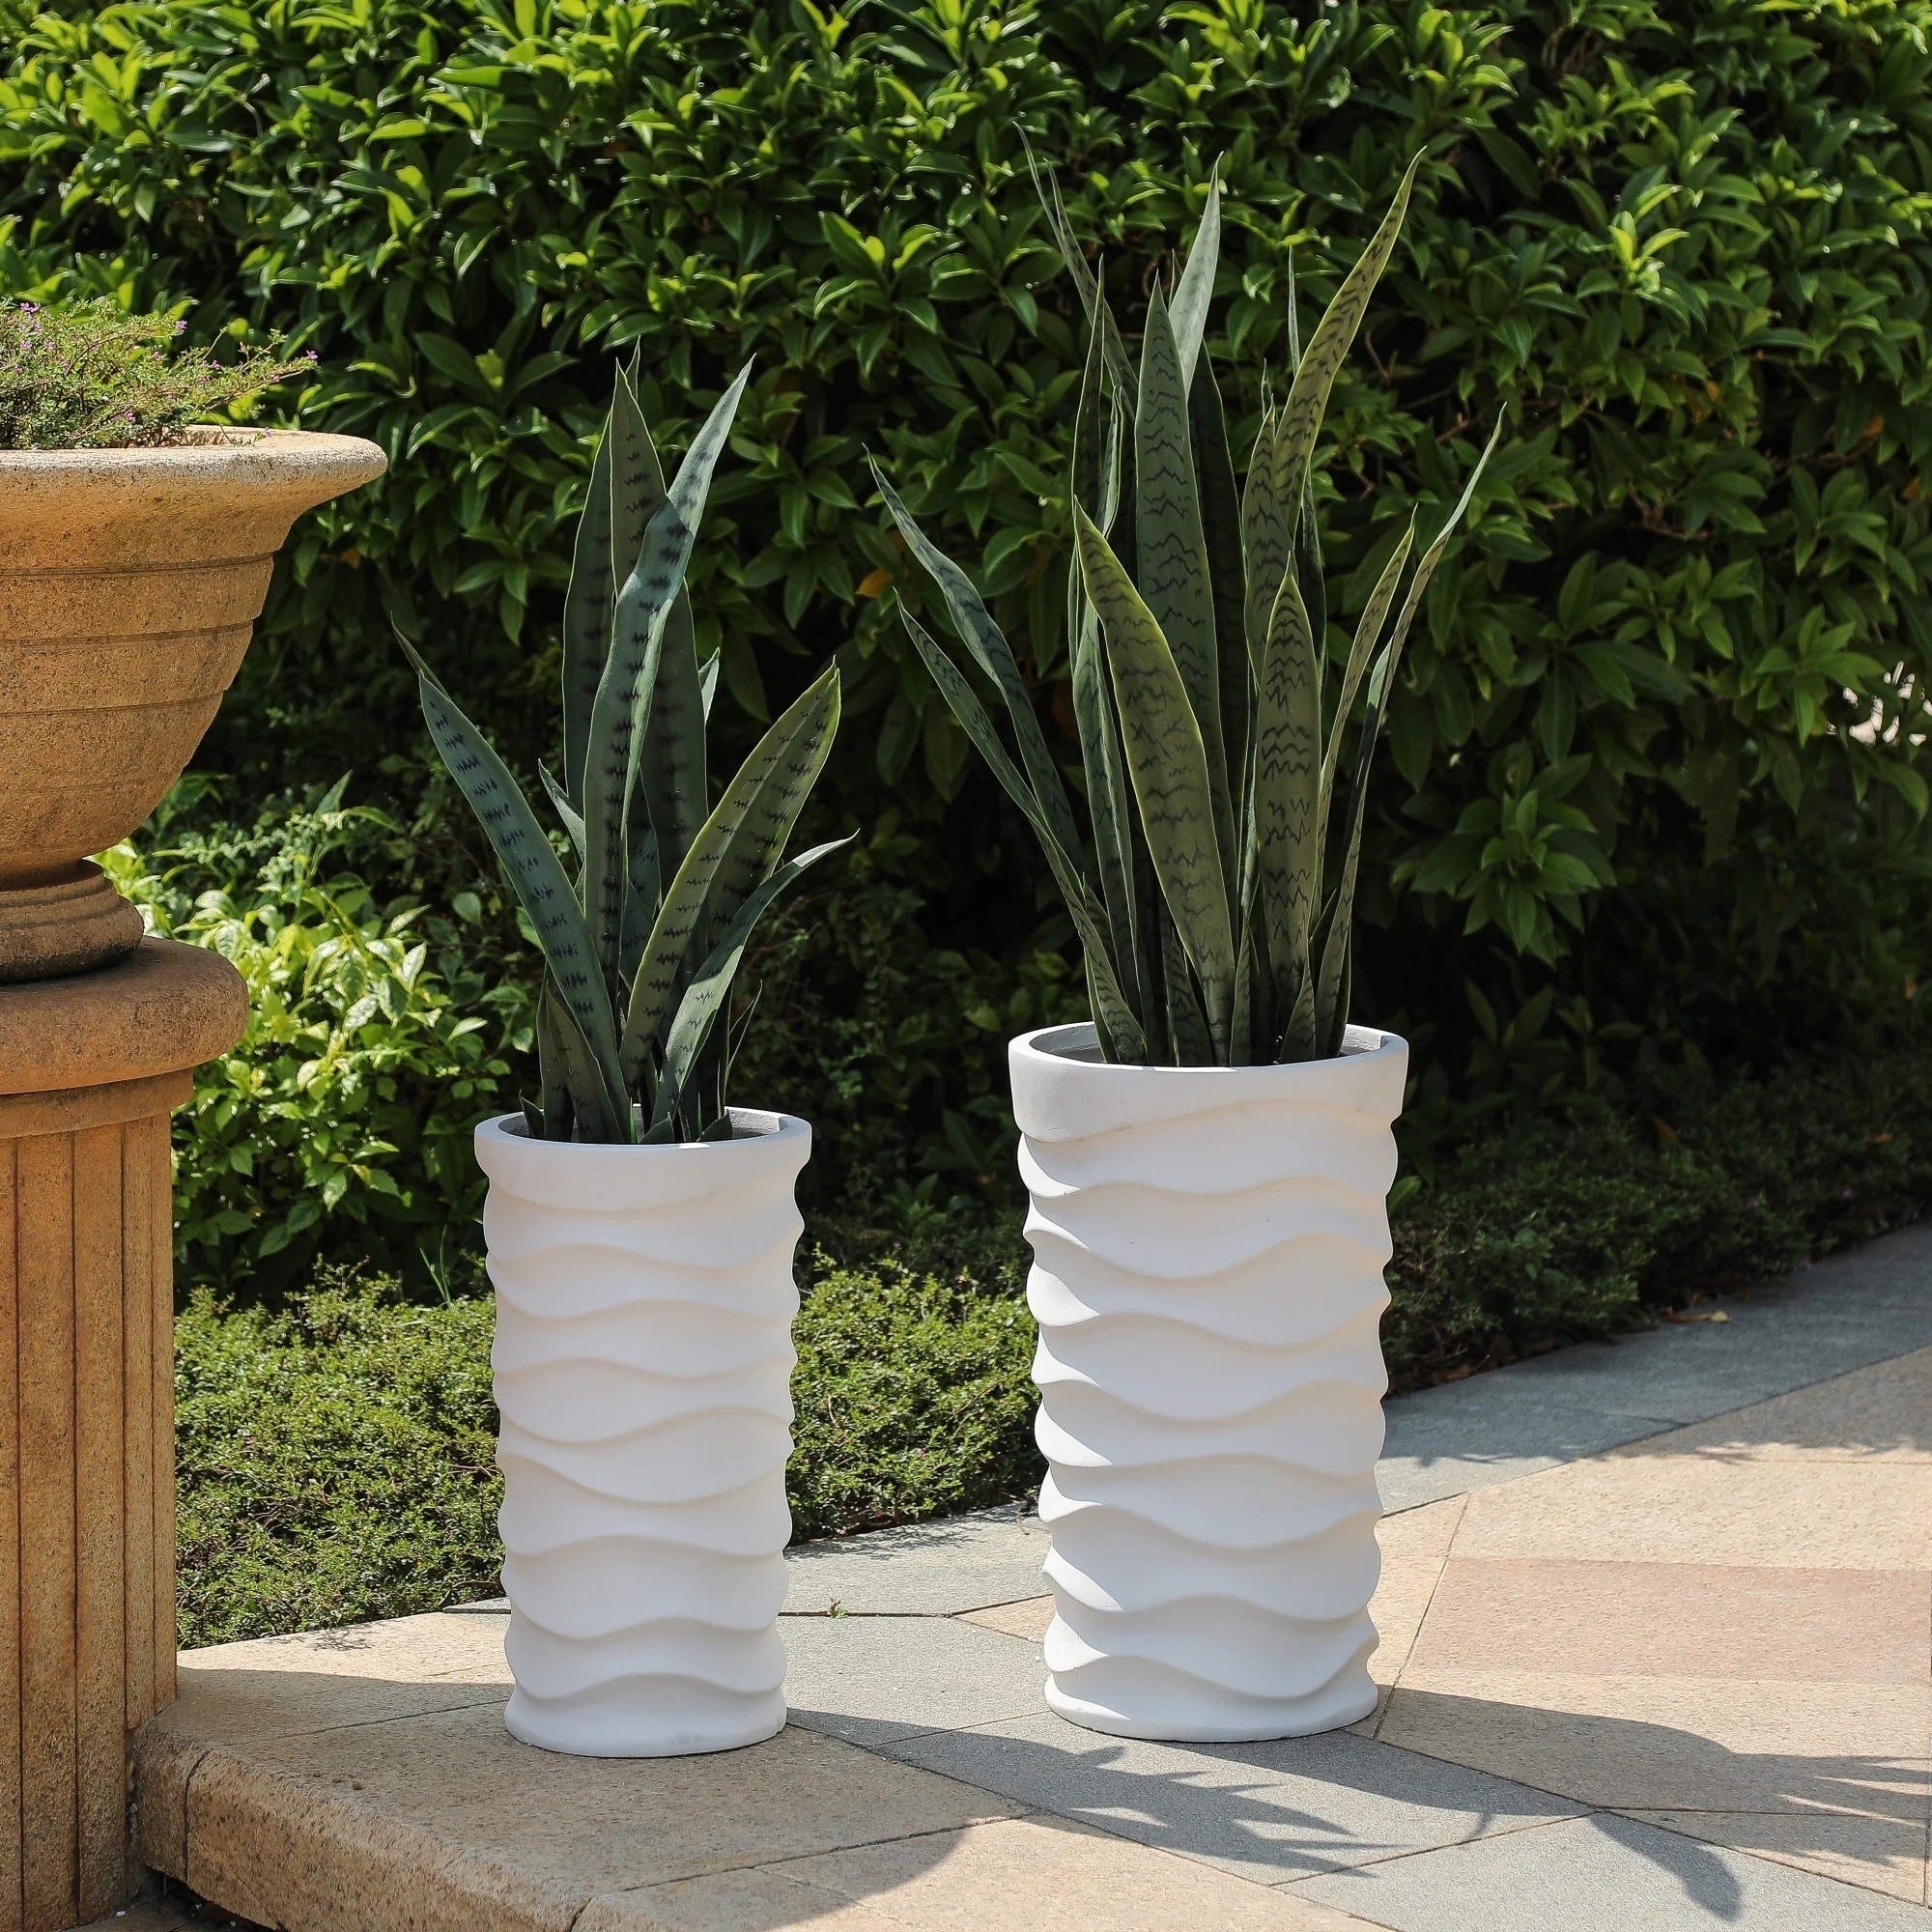 Set of tall ceramic pots